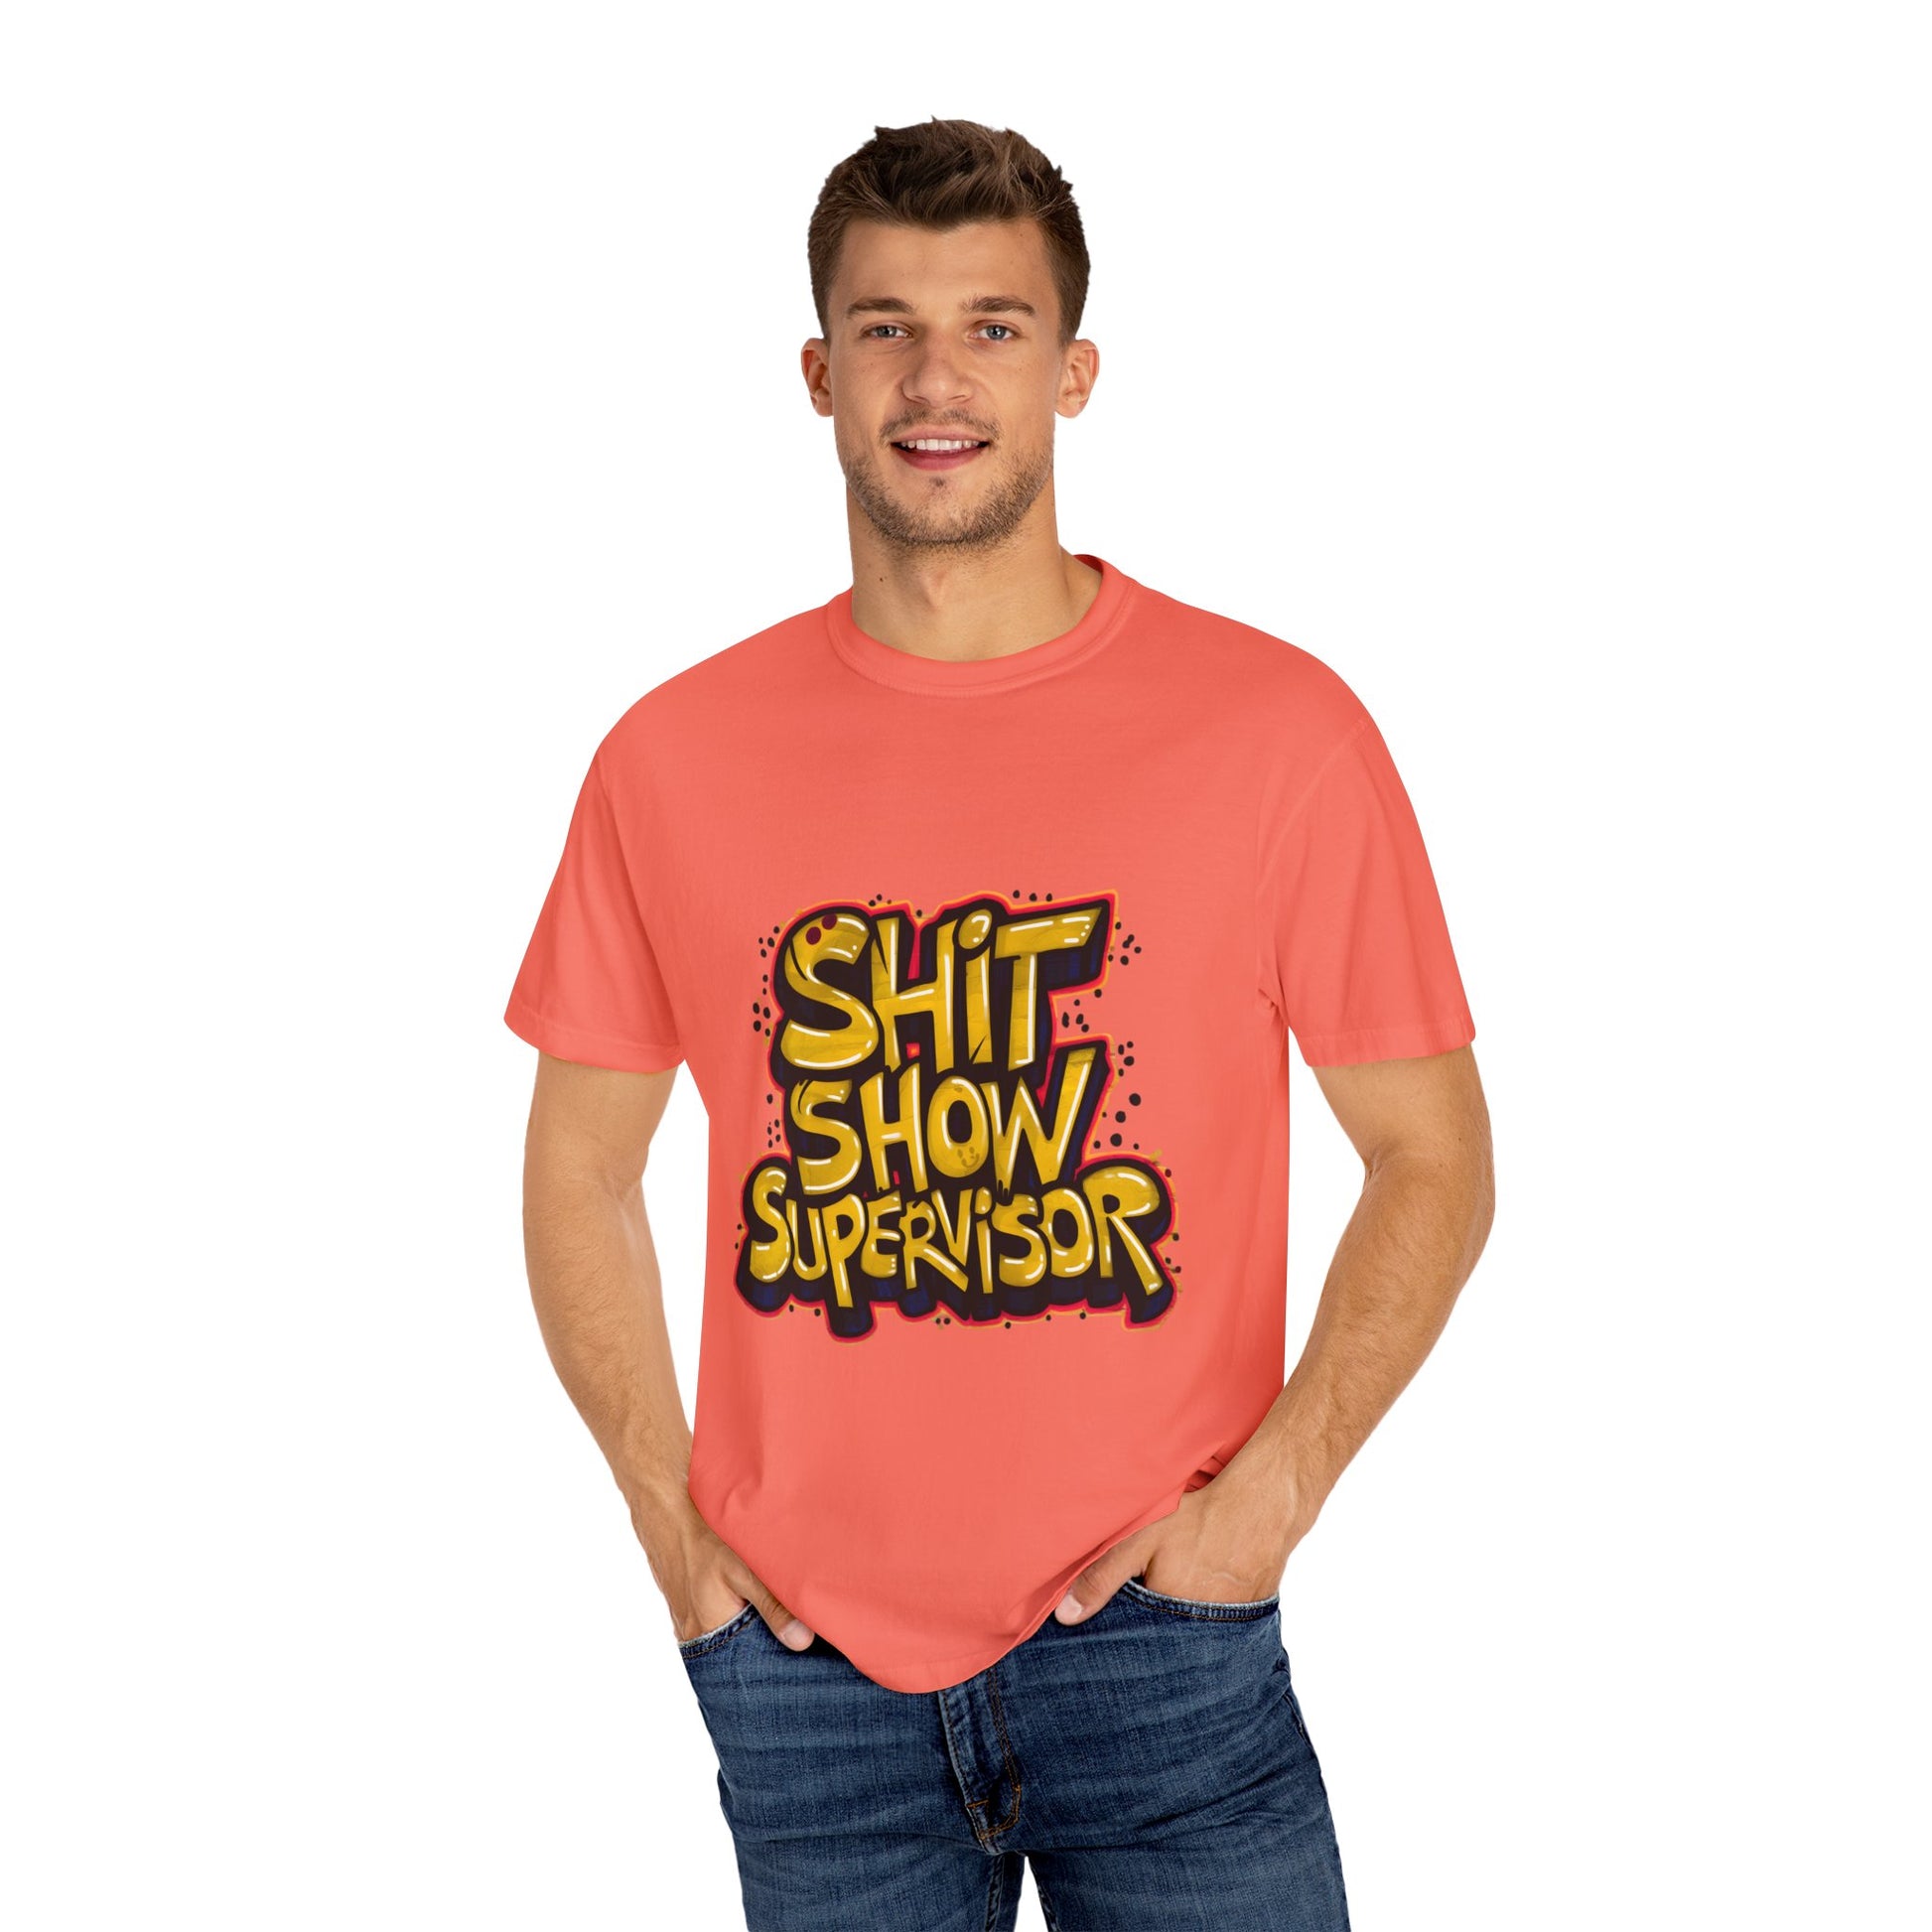 Shit Show Supervisor Urban Sarcastic Graphic Unisex Garment Dyed T-shirt Cotton Funny Humorous Graphic Soft Premium Unisex Men Women Bright Salmon T-shirt Birthday Gift-33